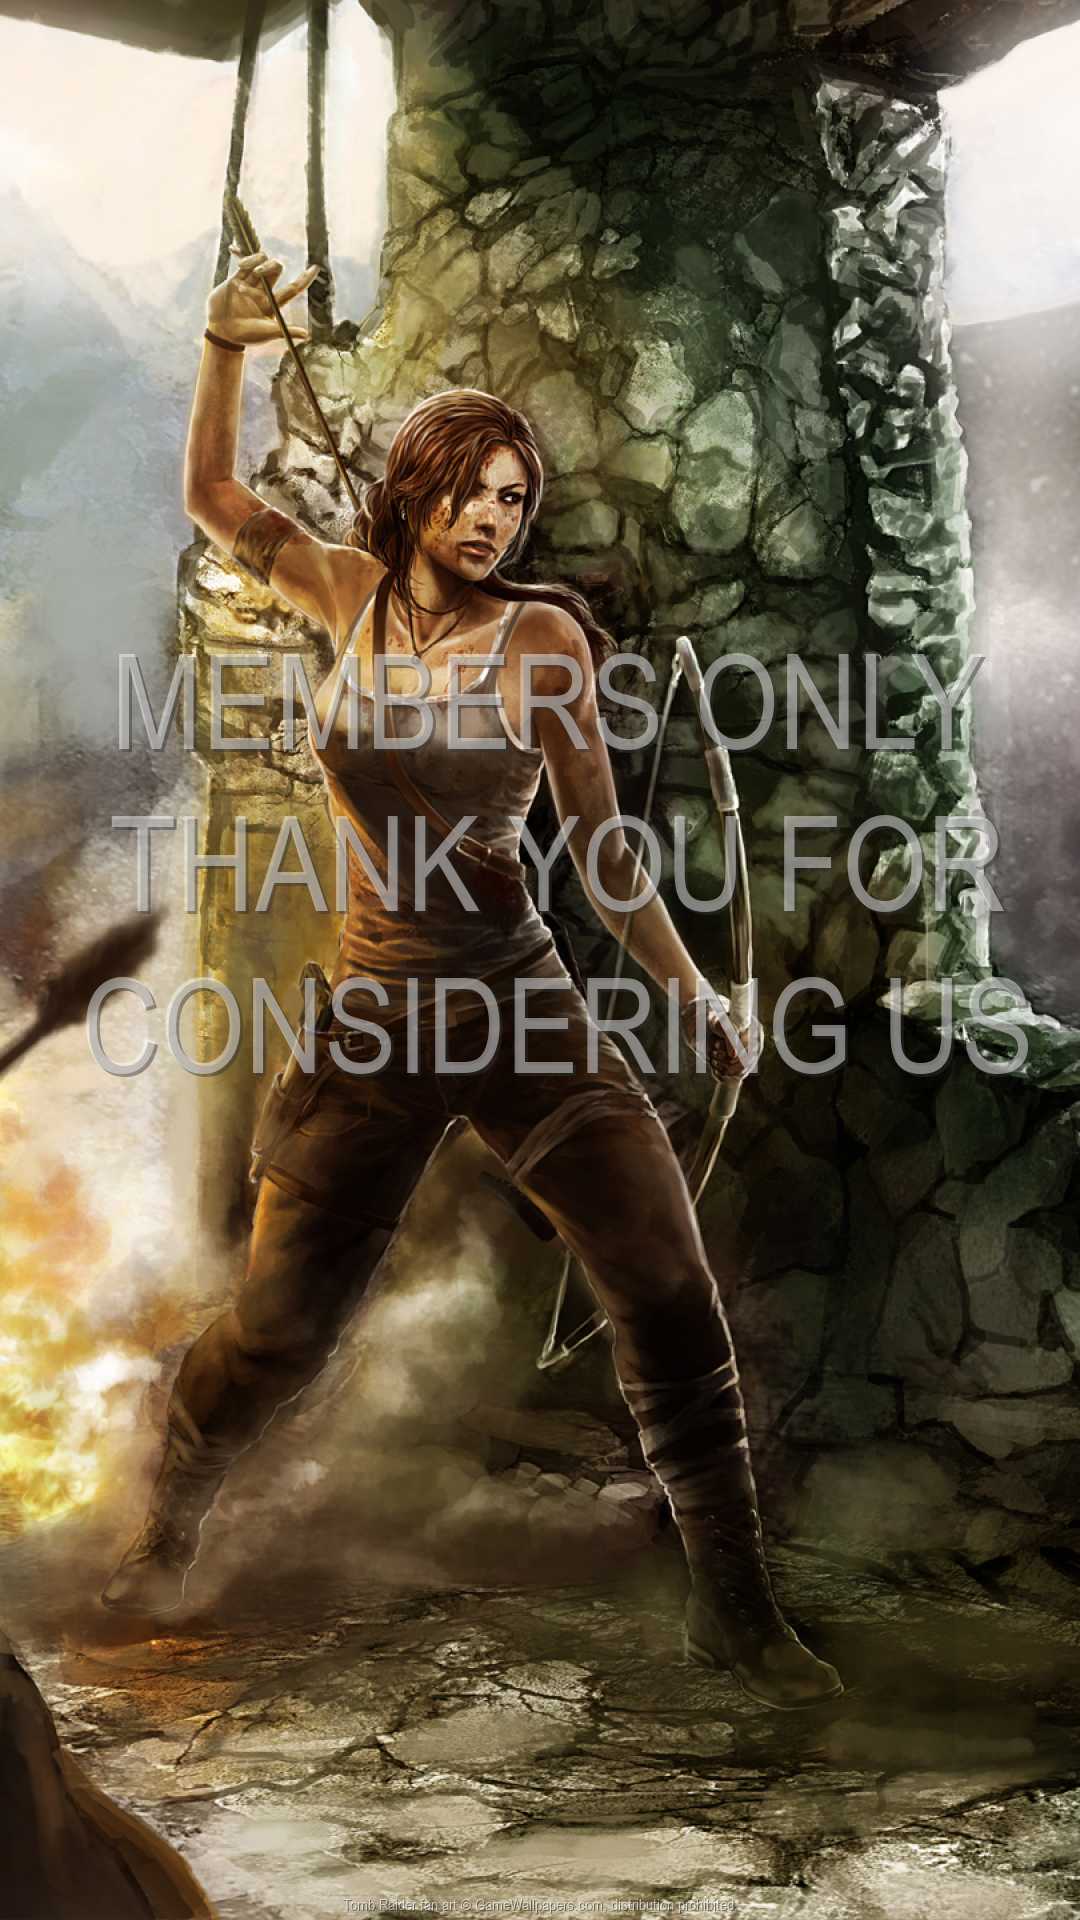 Tomb Raider fan art 1080p%20Vertical Mobile wallpaper or background 02